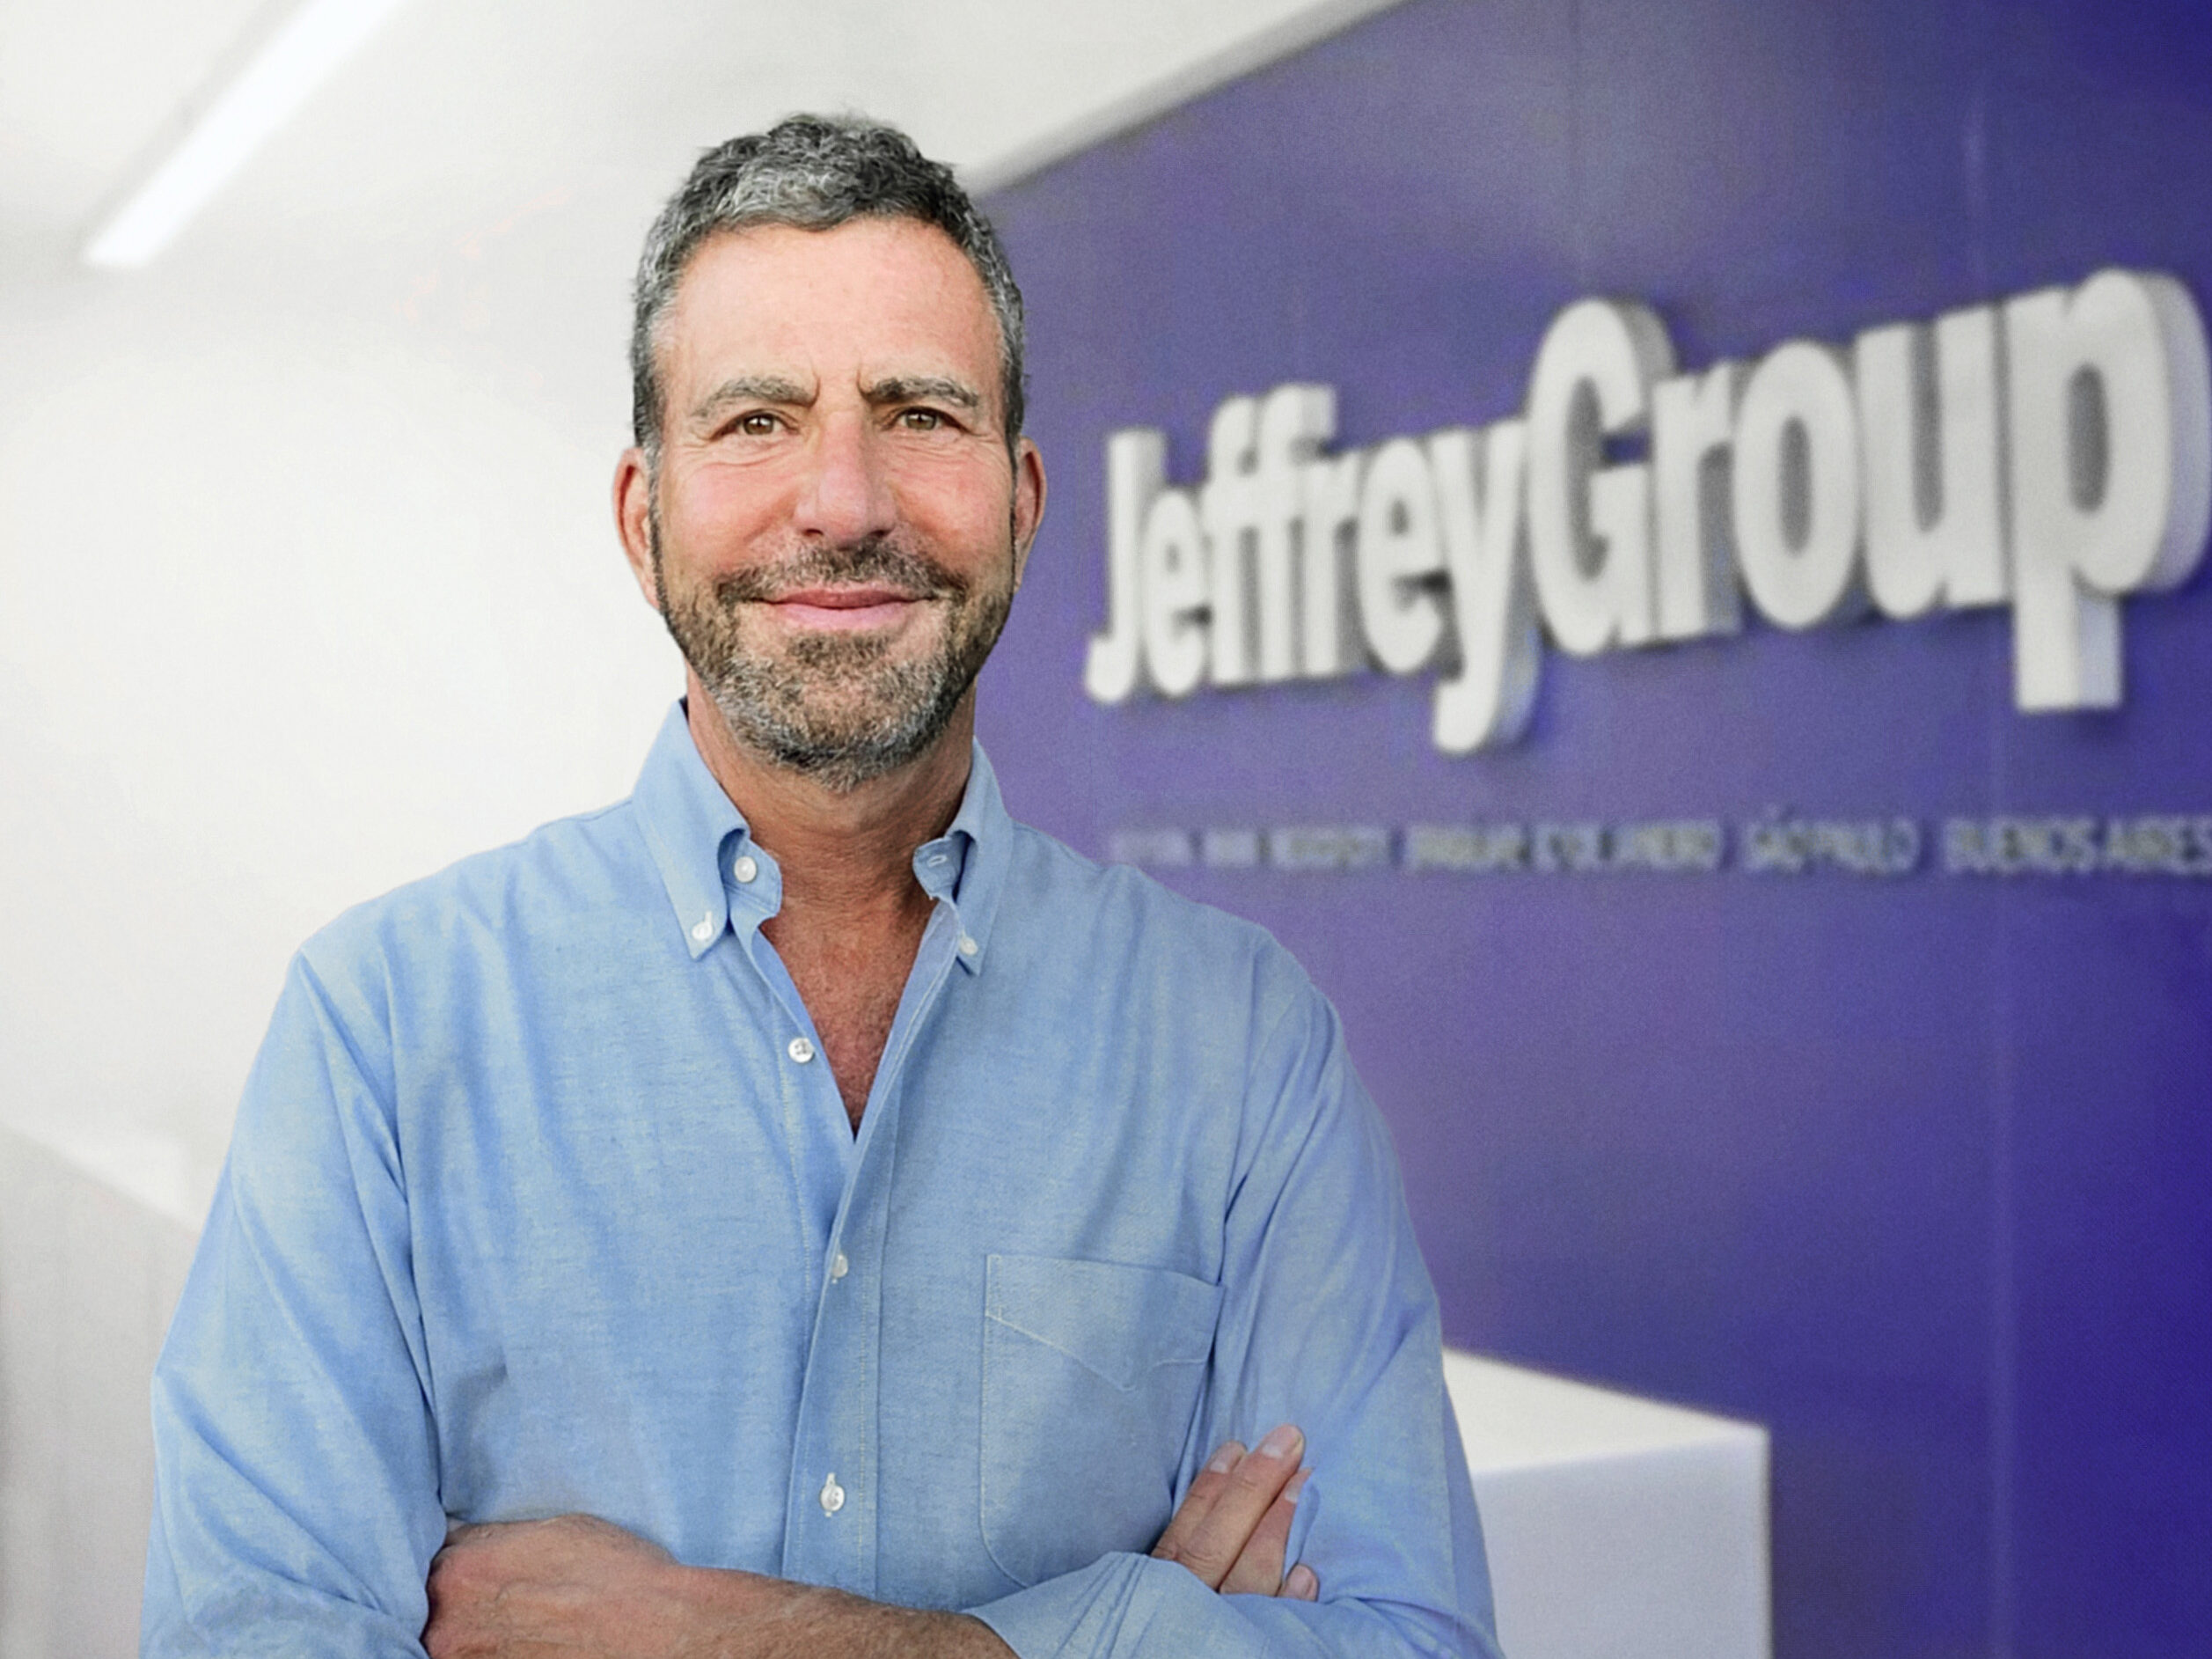 JeffreyGroup Founder Jeffrey Sharlach to Retire